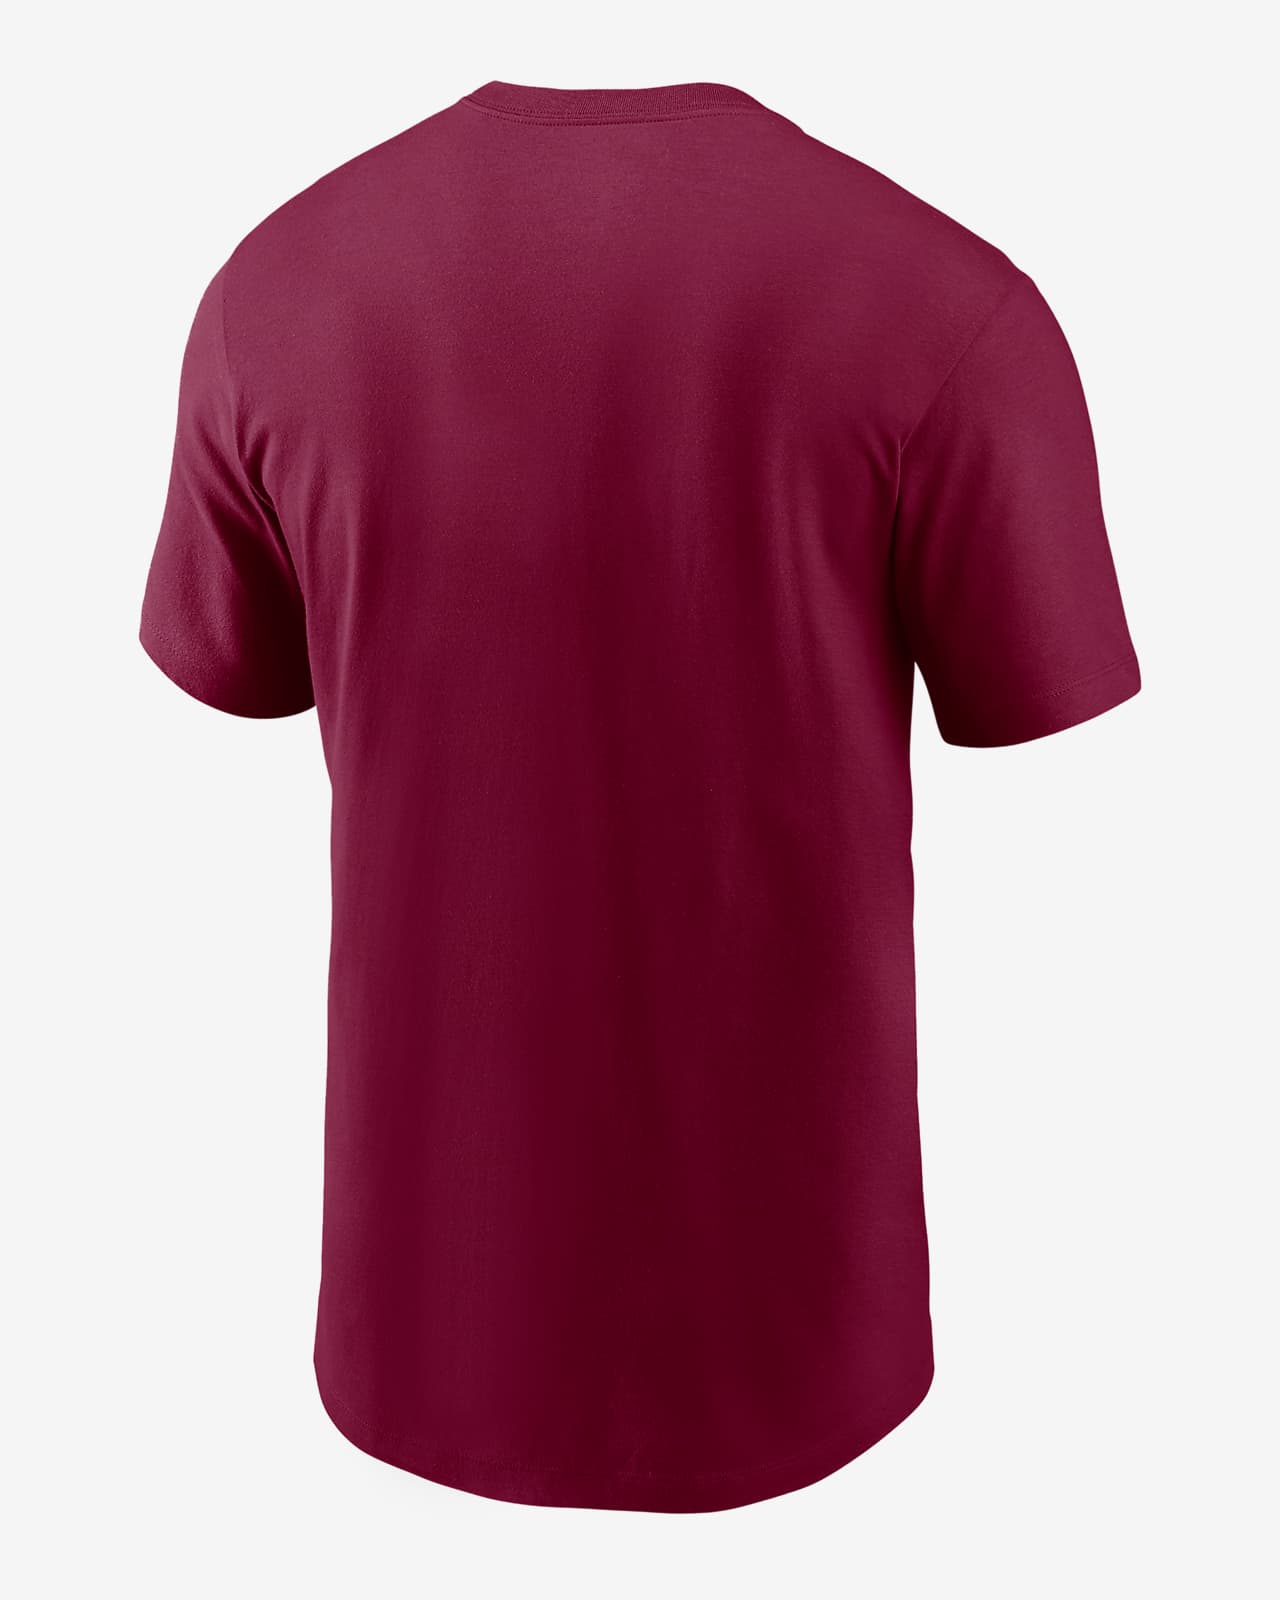 Nike Wordmark Essential (NFL Washington Commanders) Men's T-Shirt. Nike.com